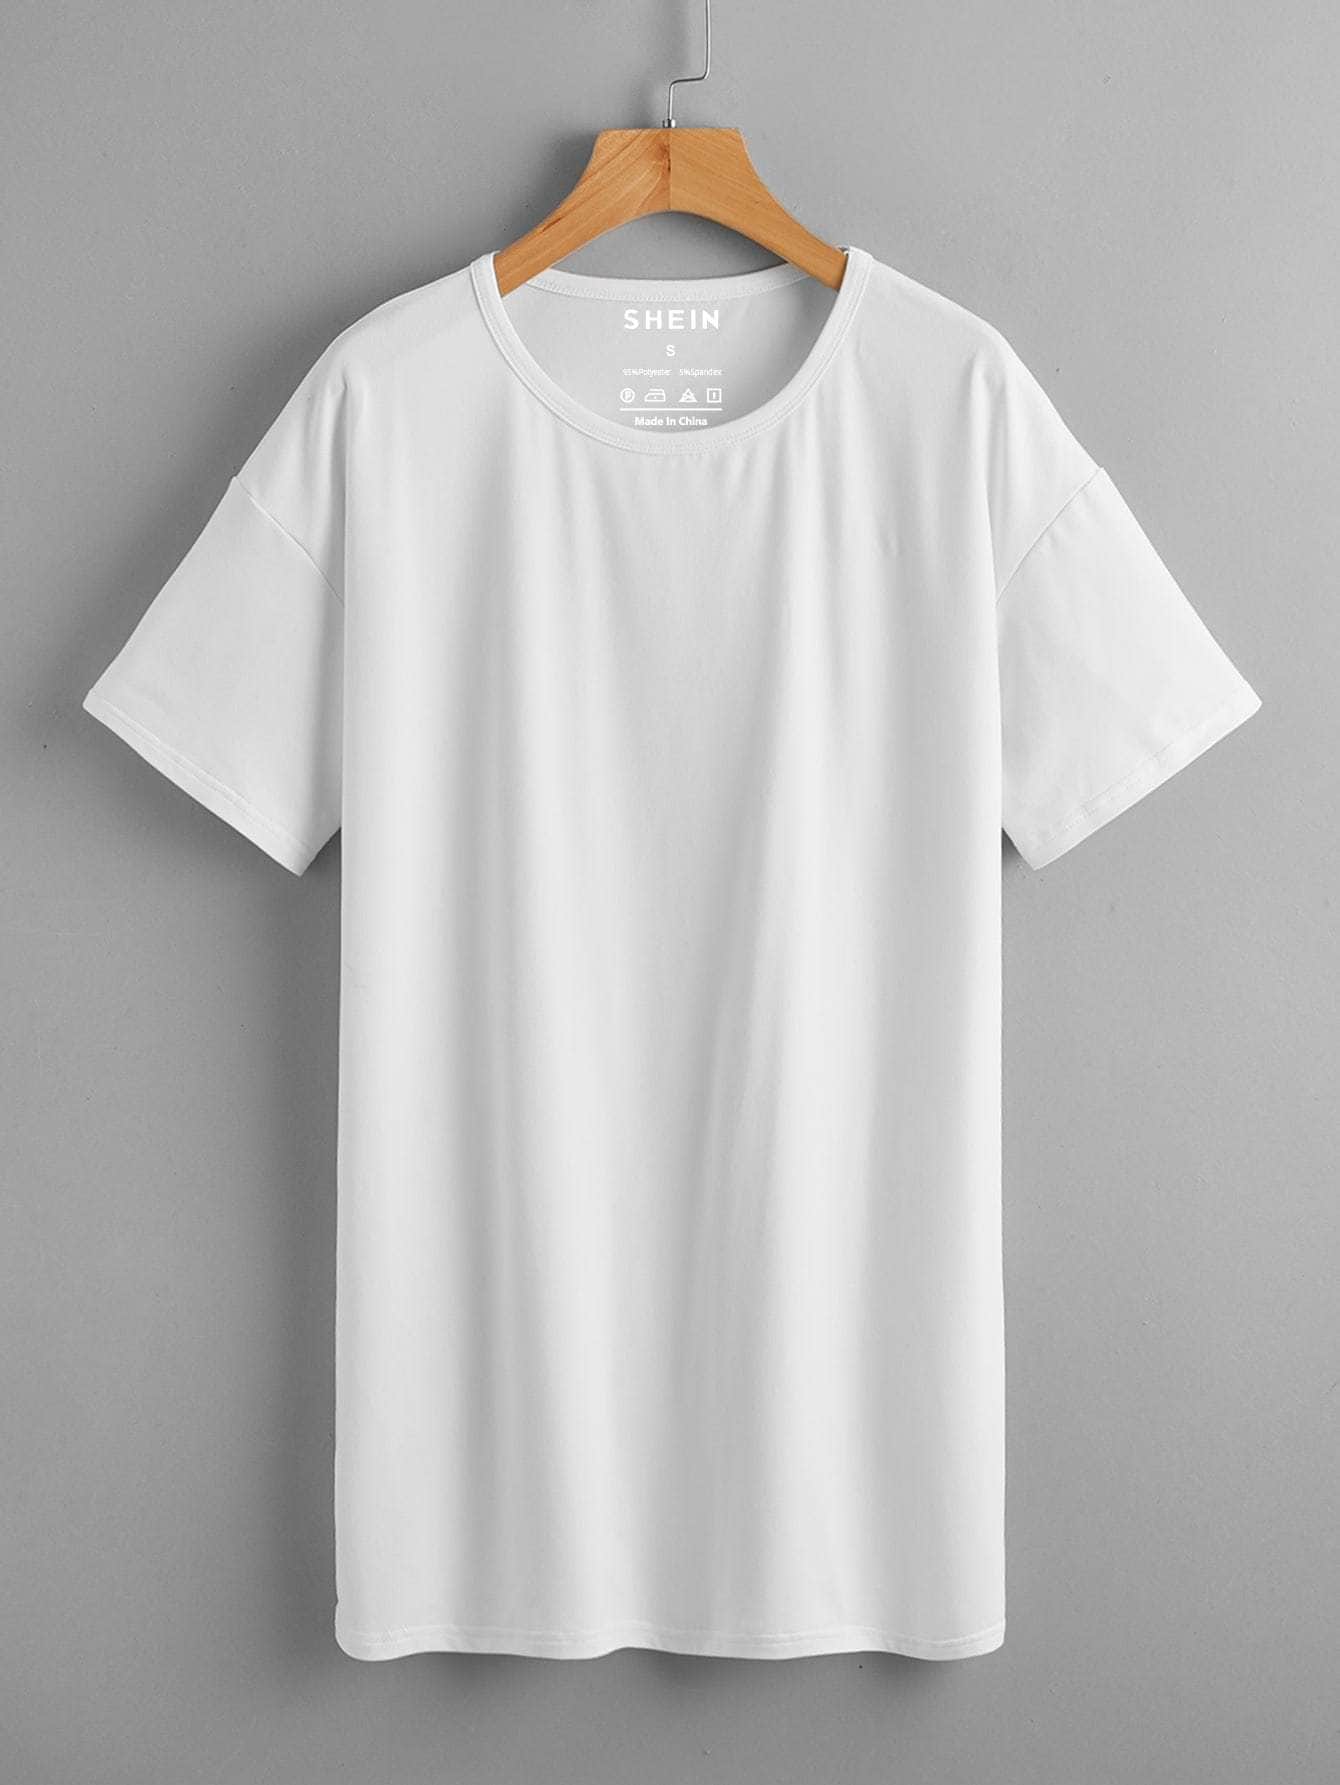 Blanco / S Camisetas Liso Básico